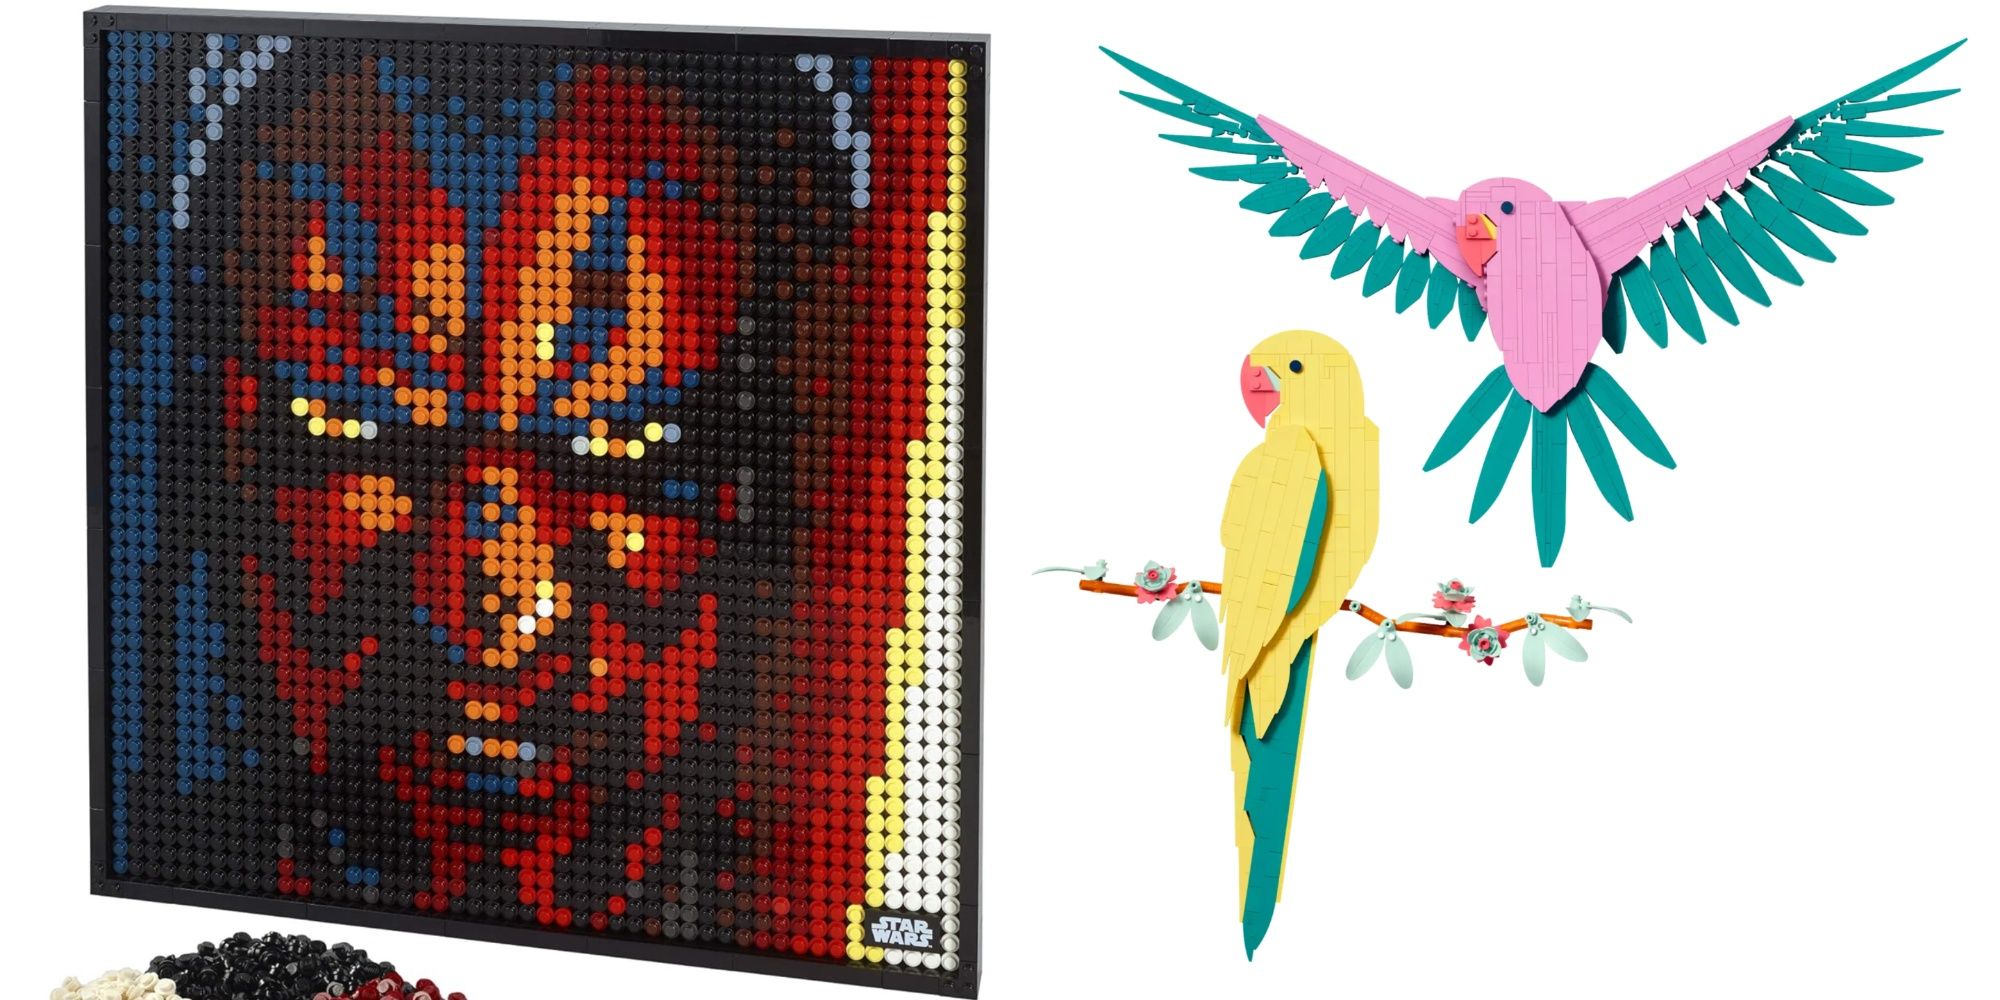 Lego Art Featured Split Image